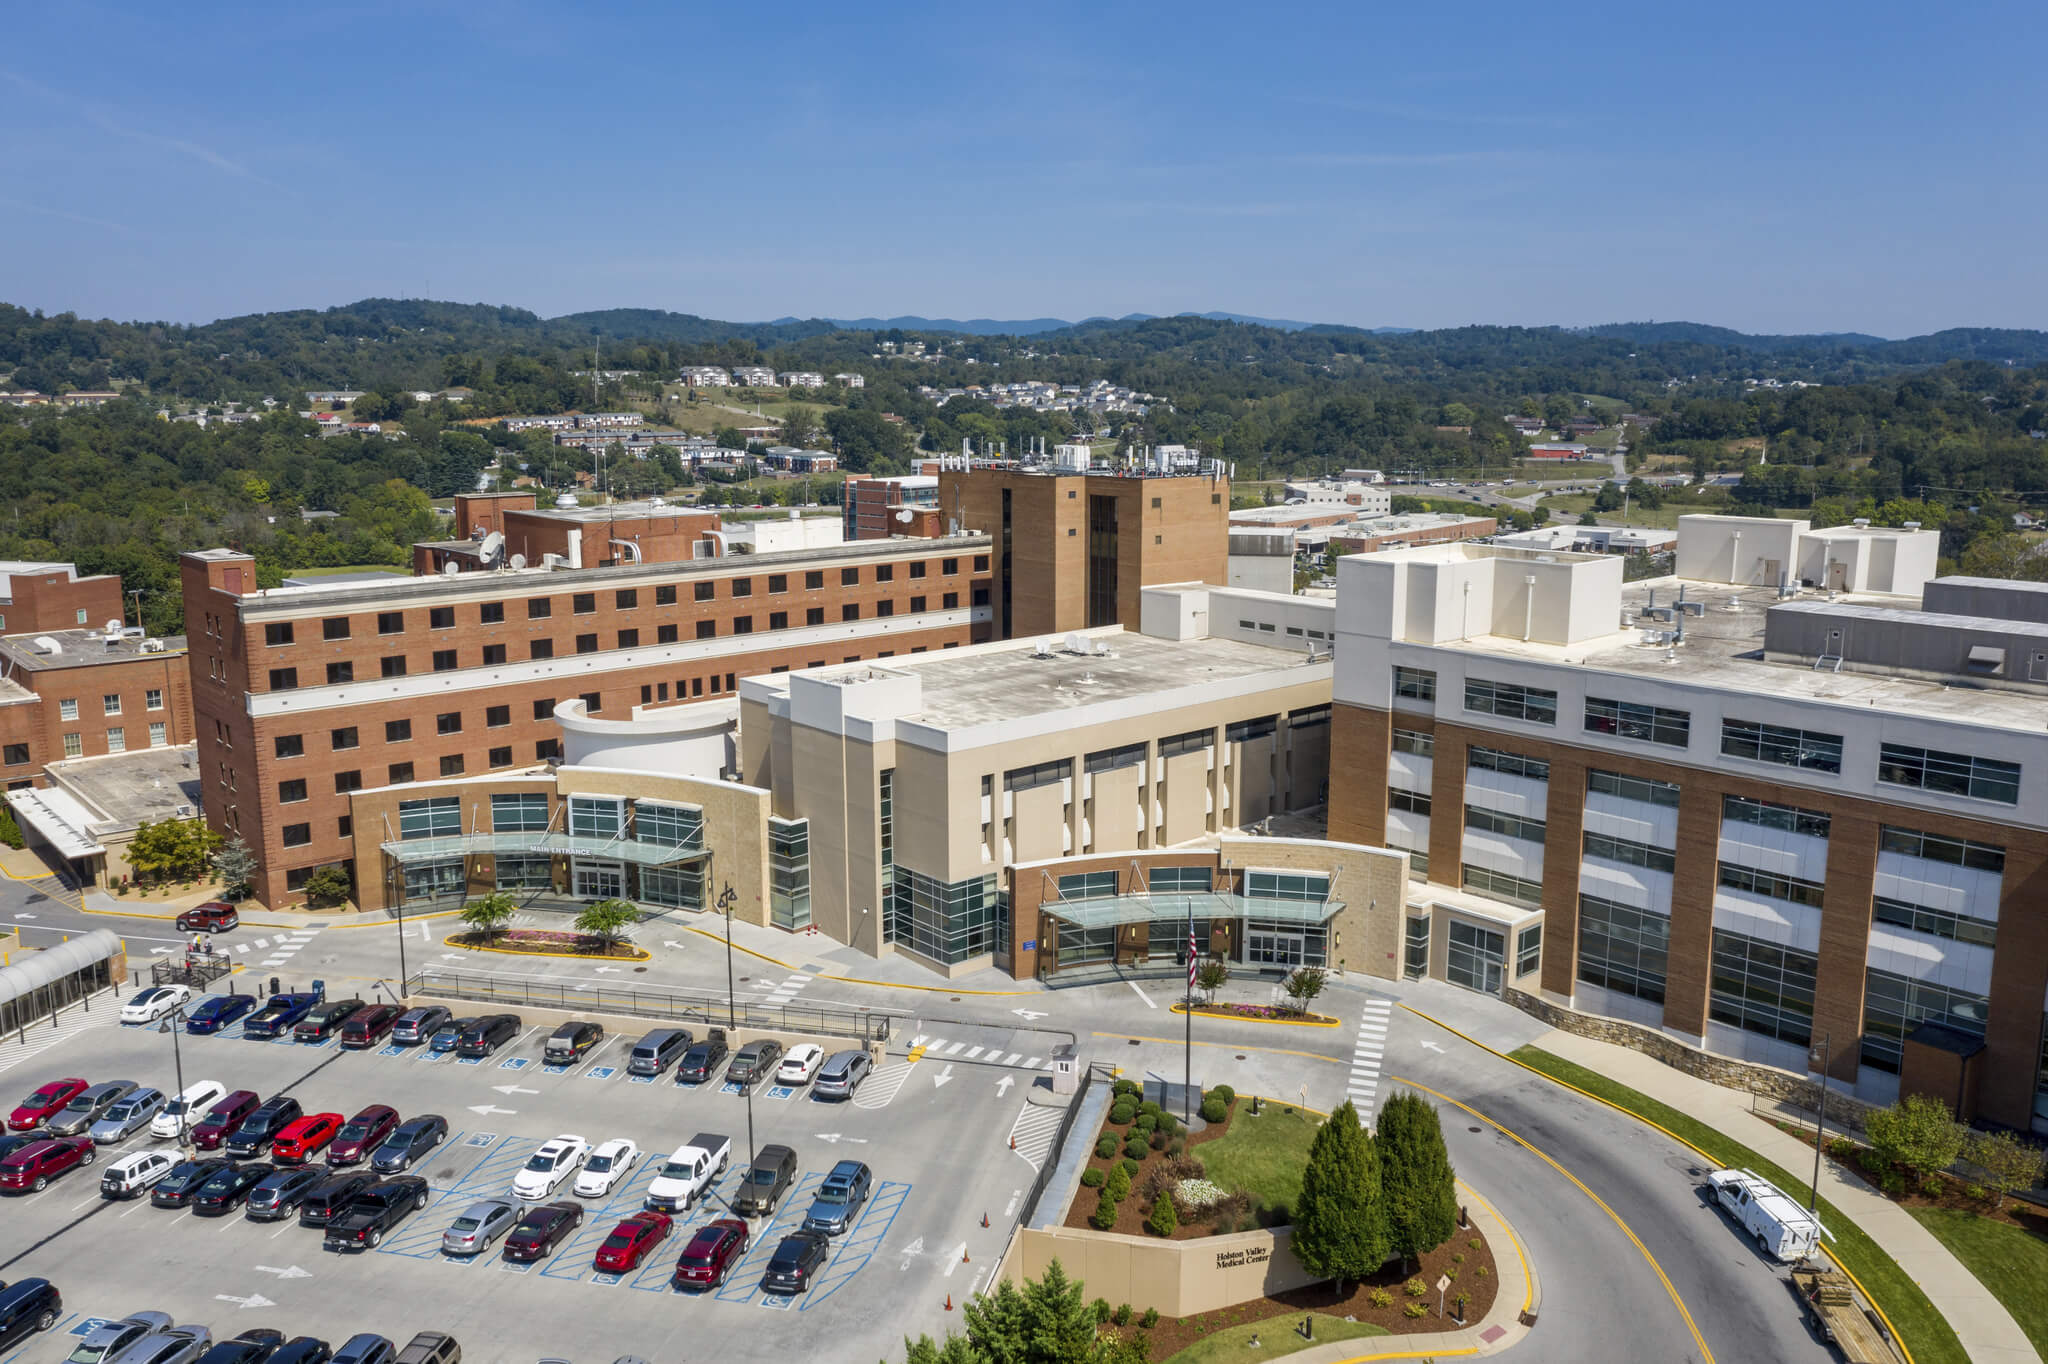 Holston Valley Medical Center ariel view